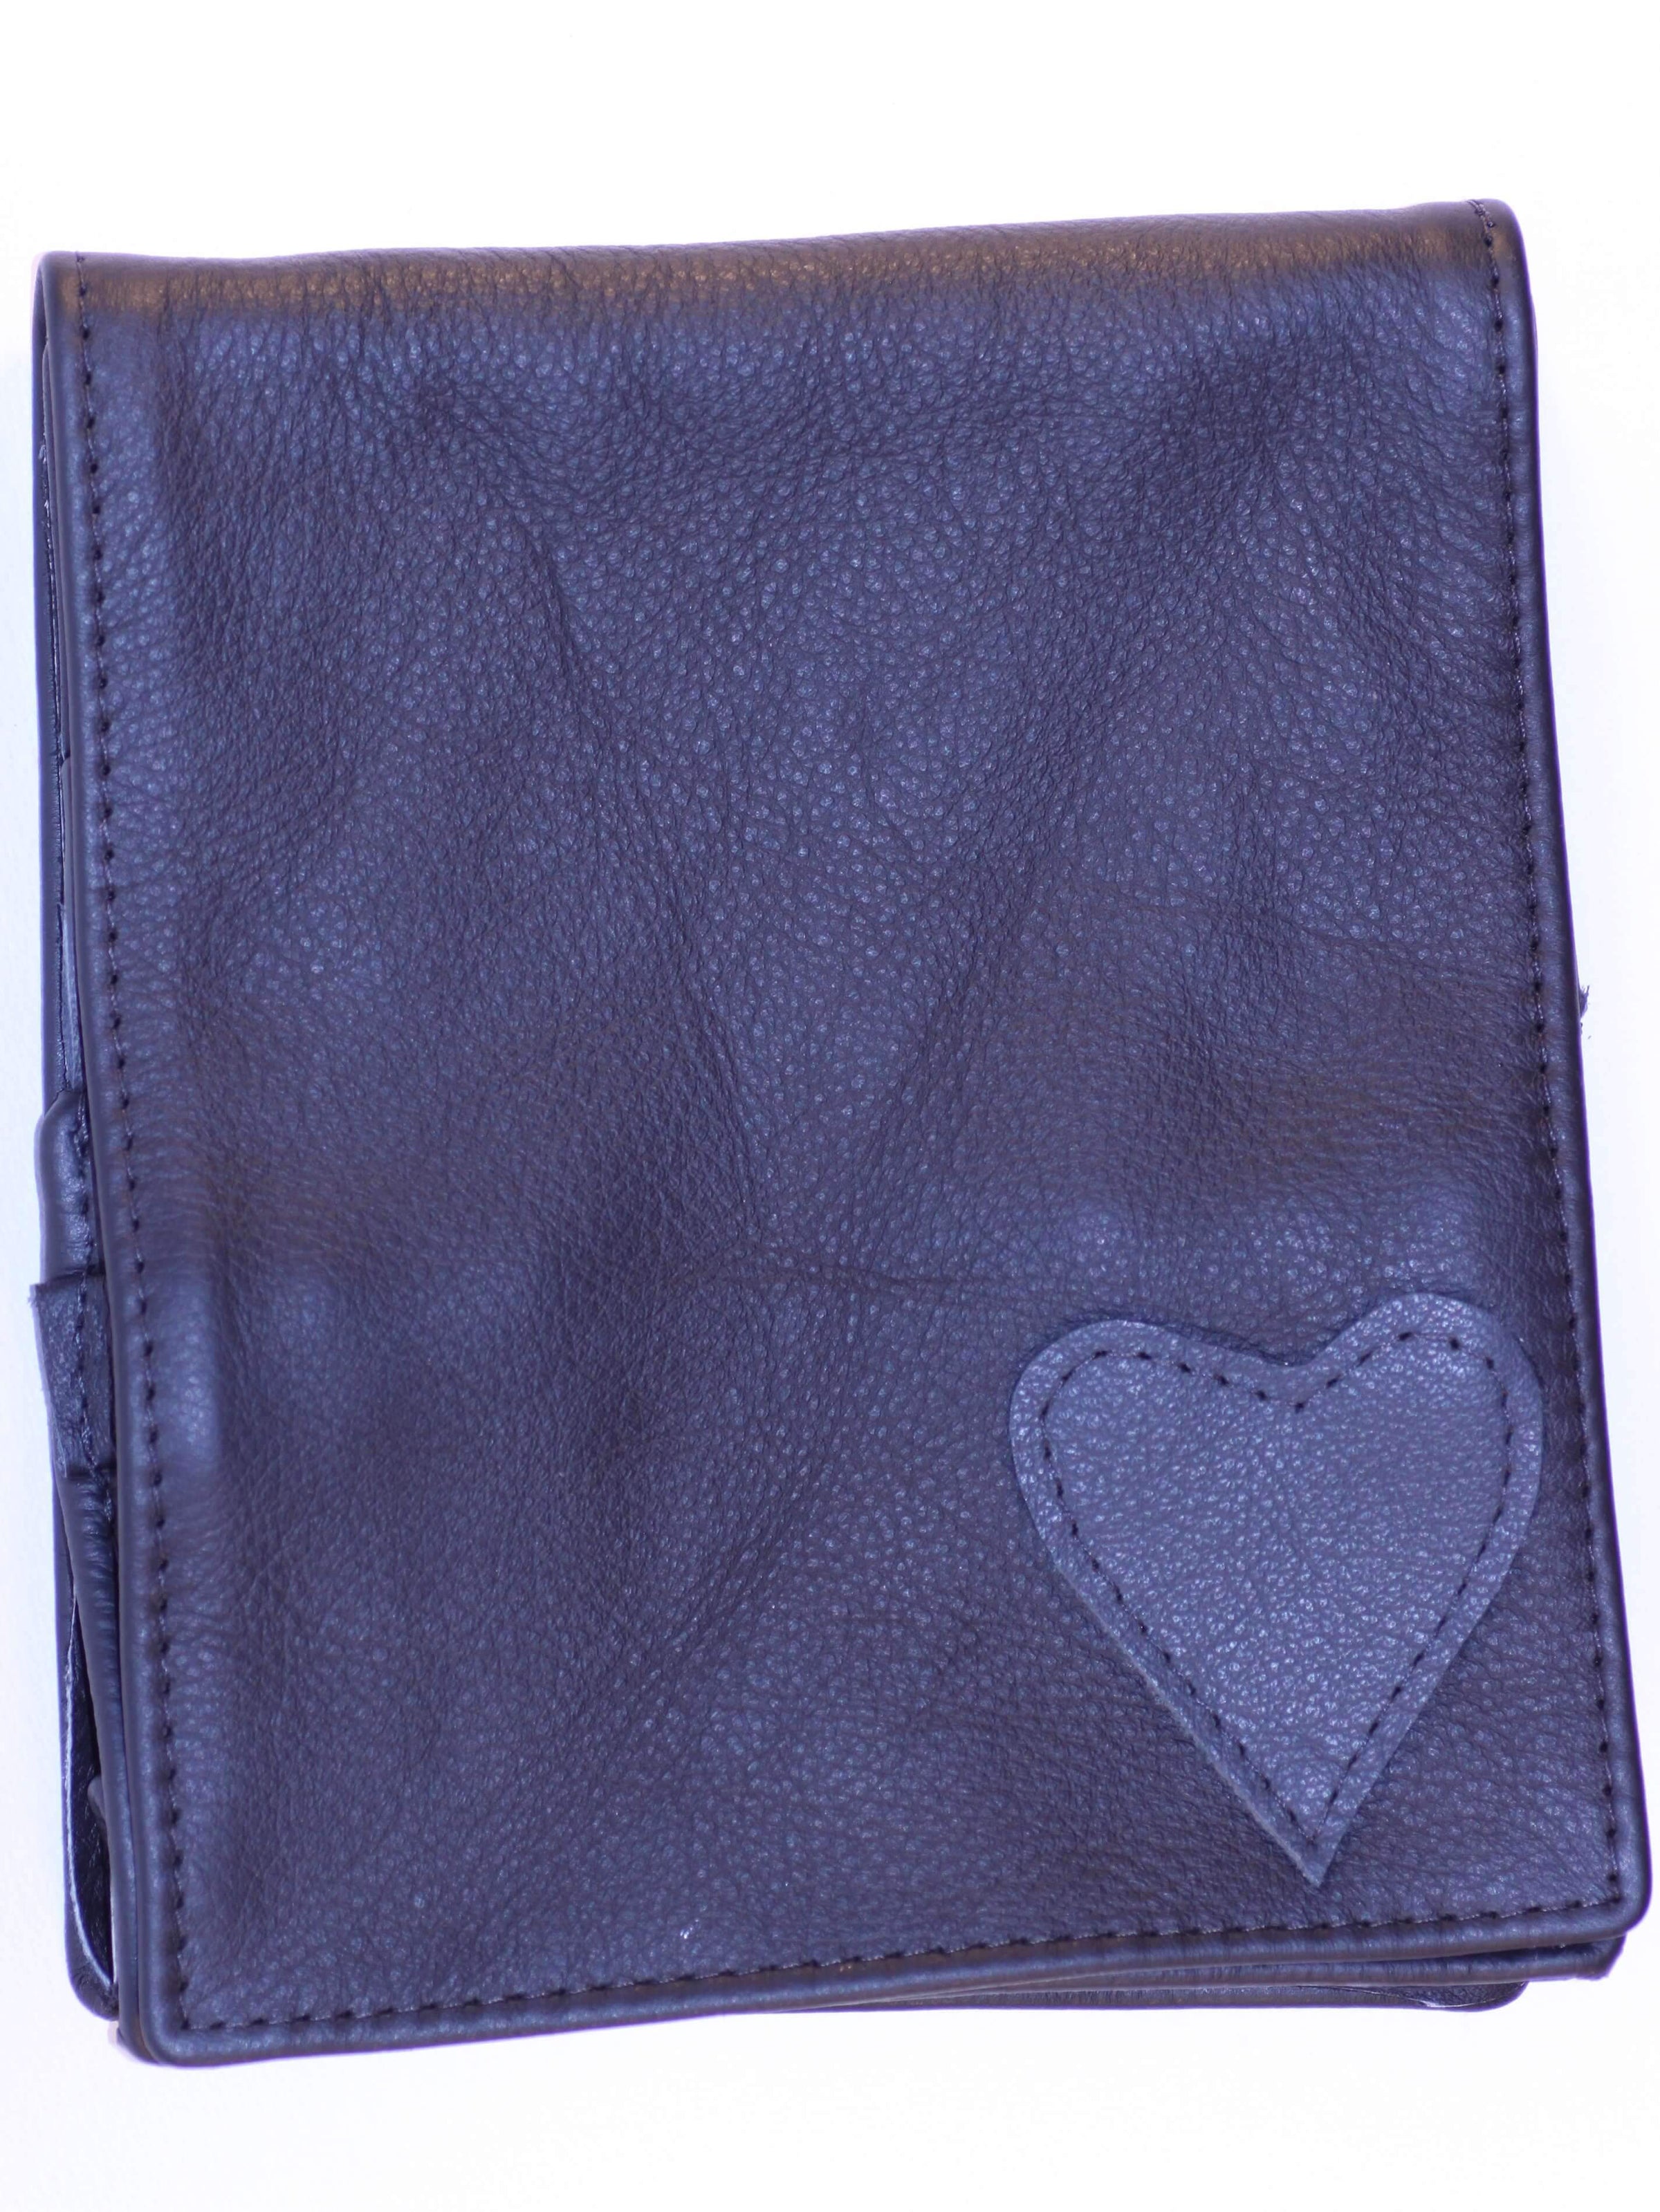 Leather Artisan Handmade leather scissor pouch heart